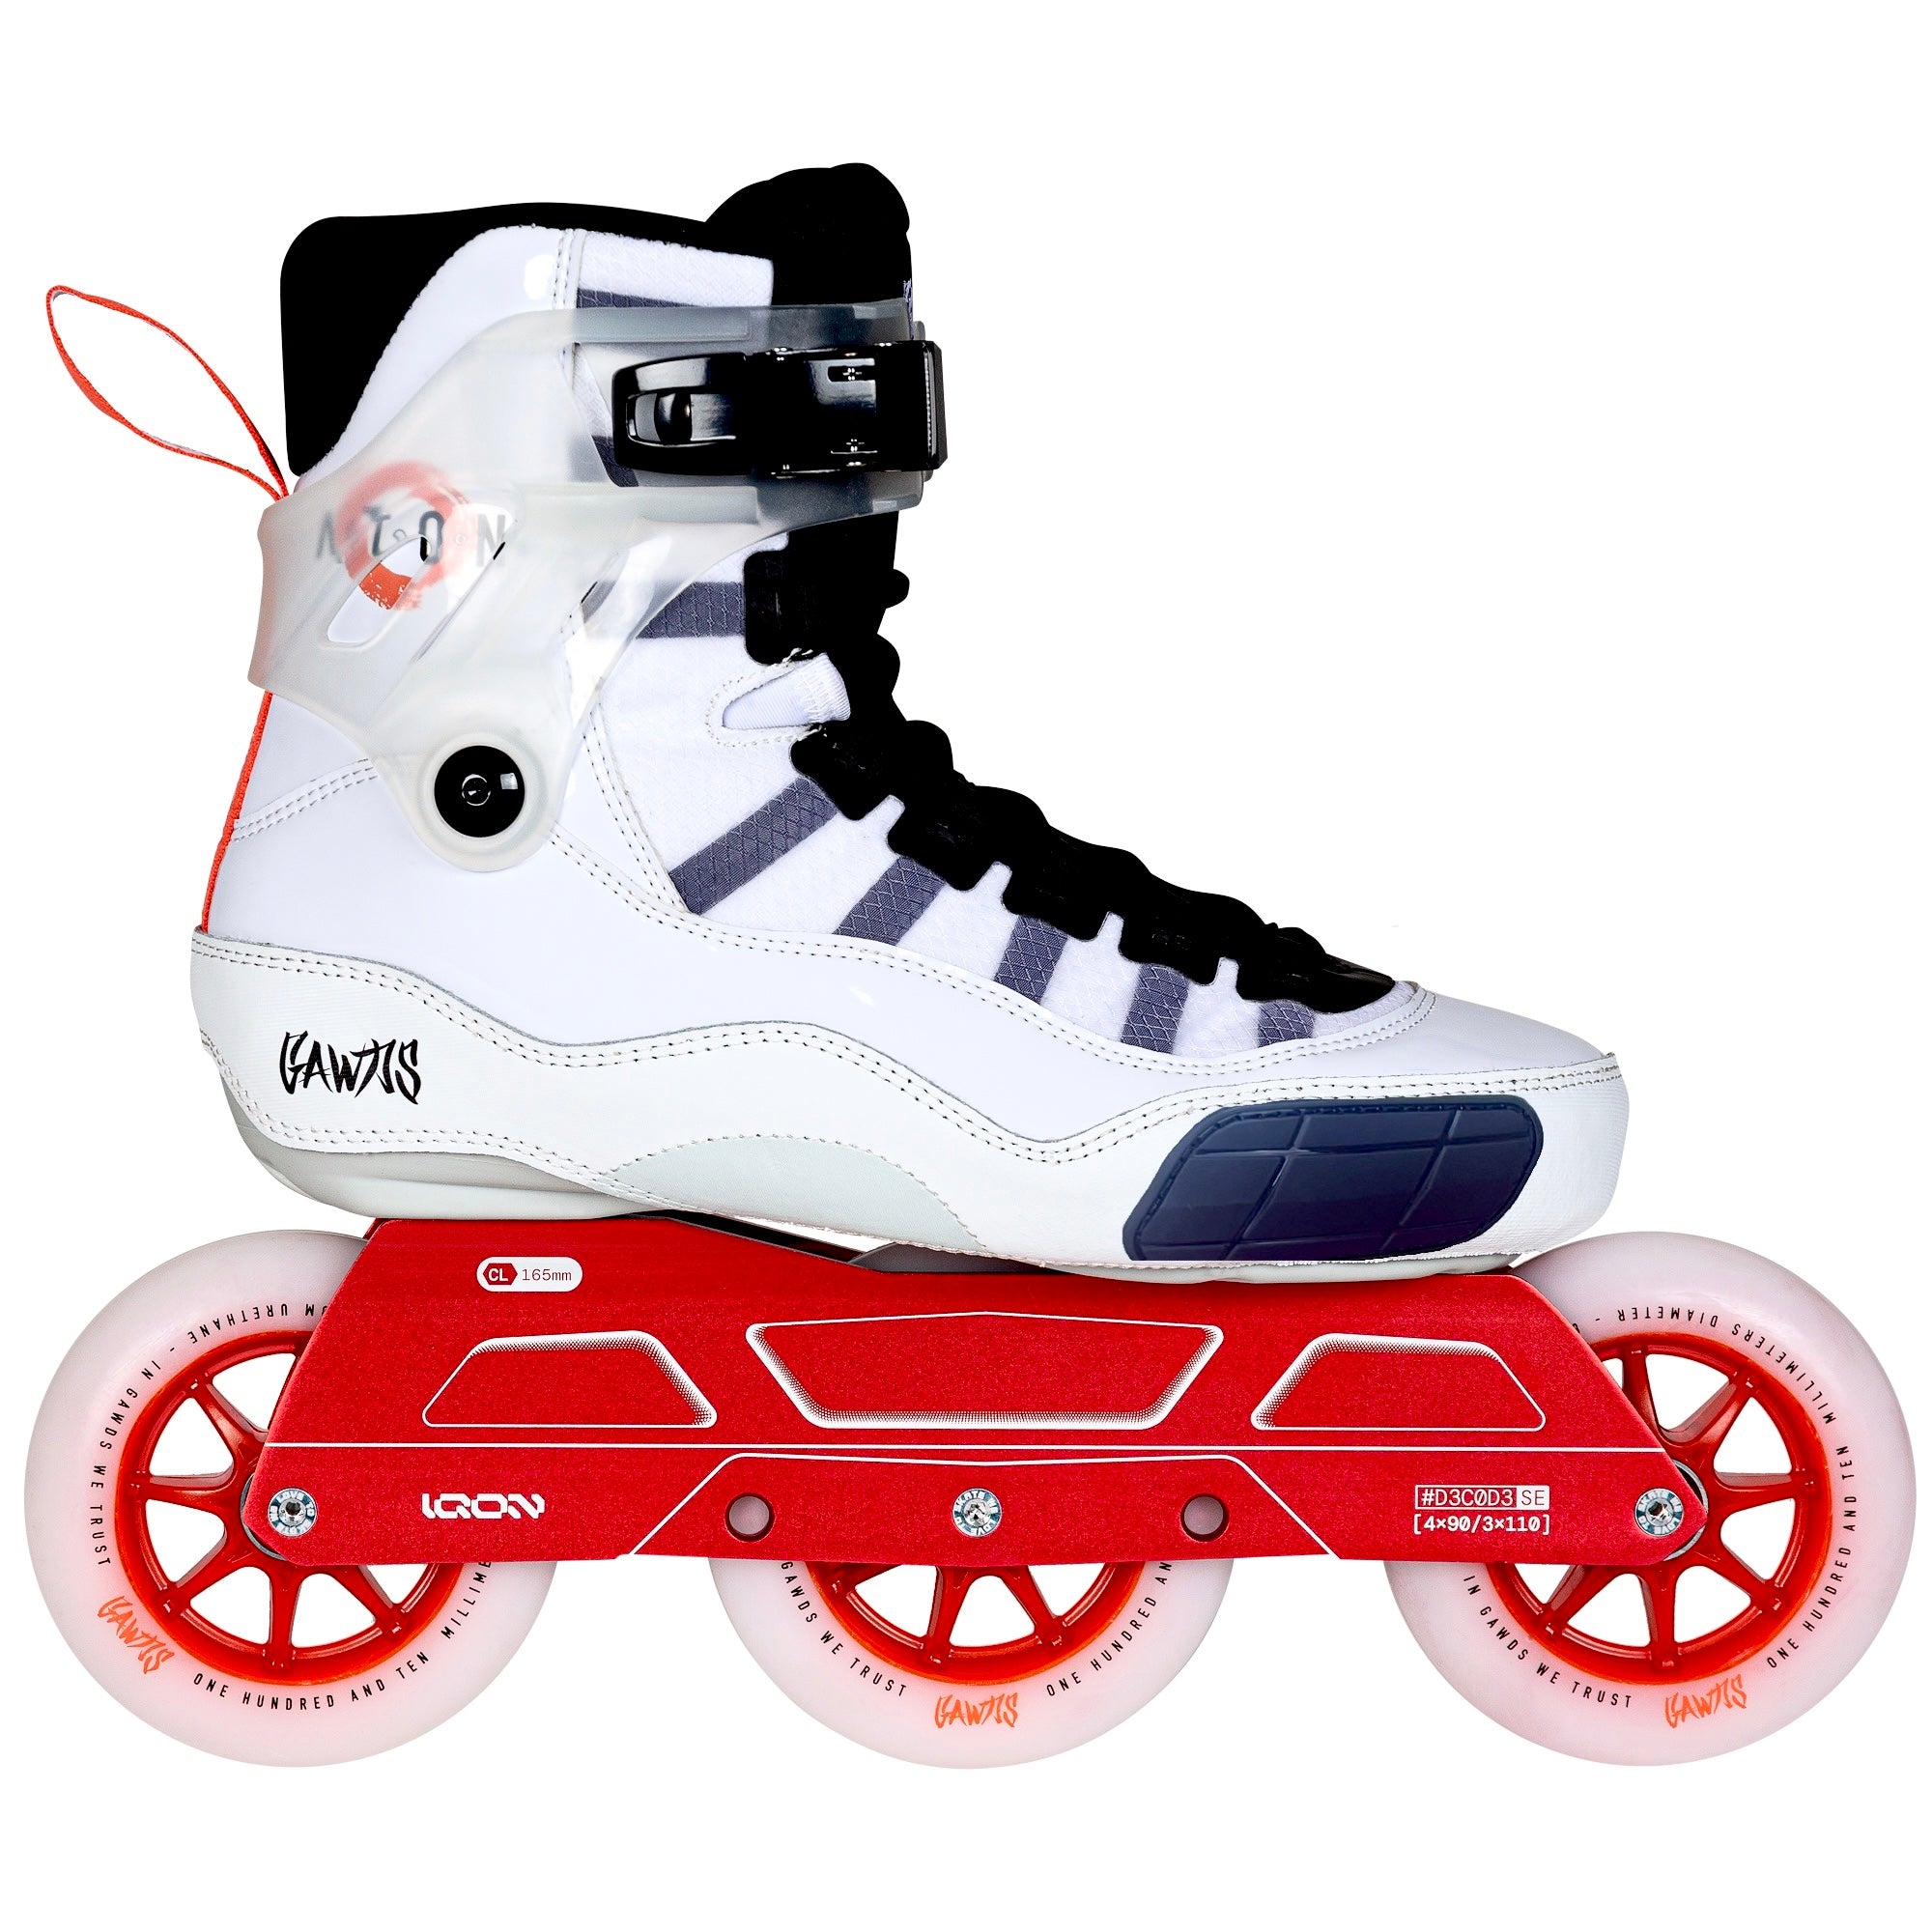 Gawds Aton Recreational skates